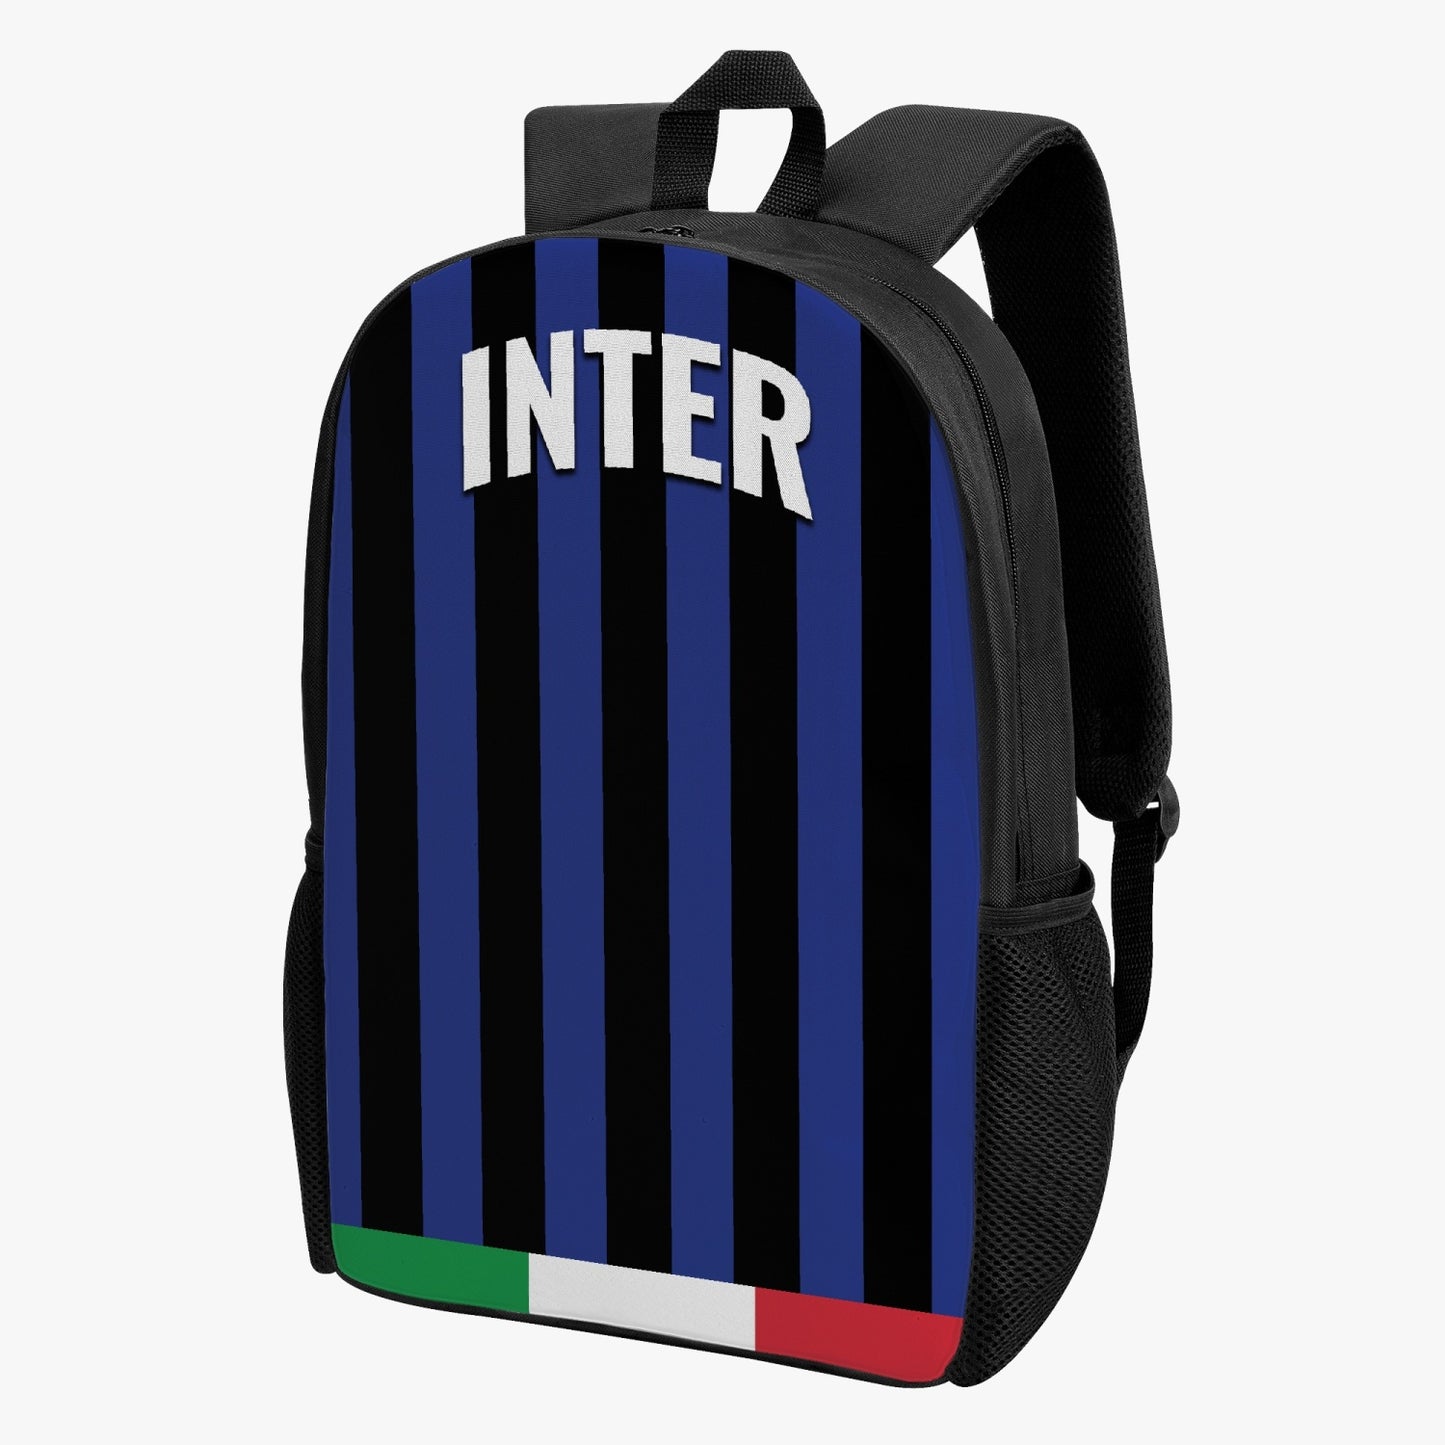 Inter Kid's School Backpack